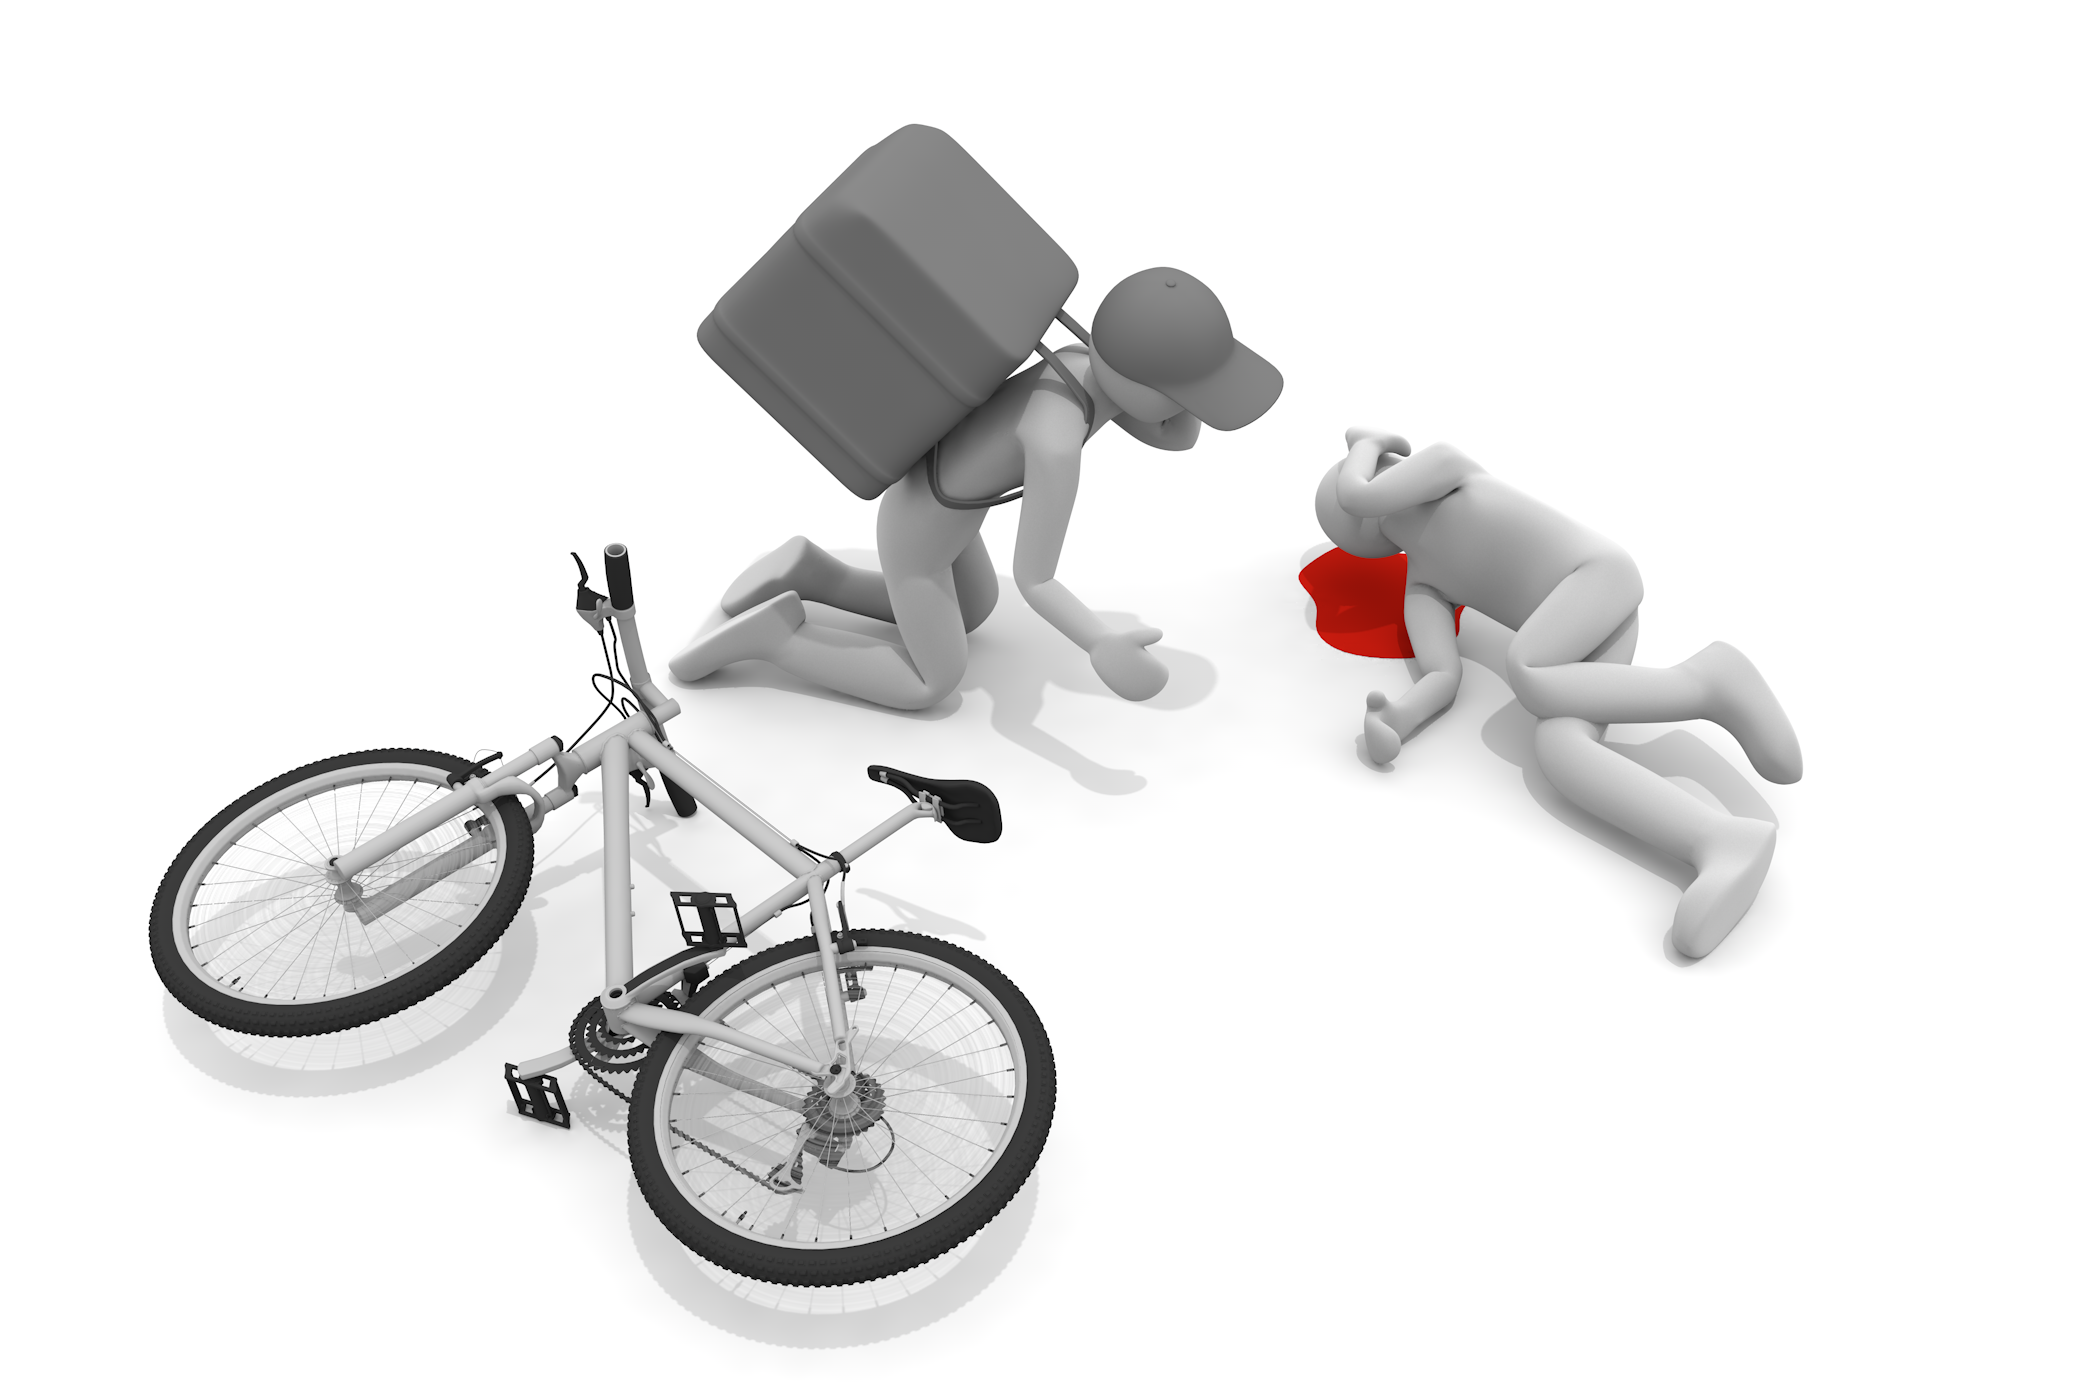 bike accident clip art